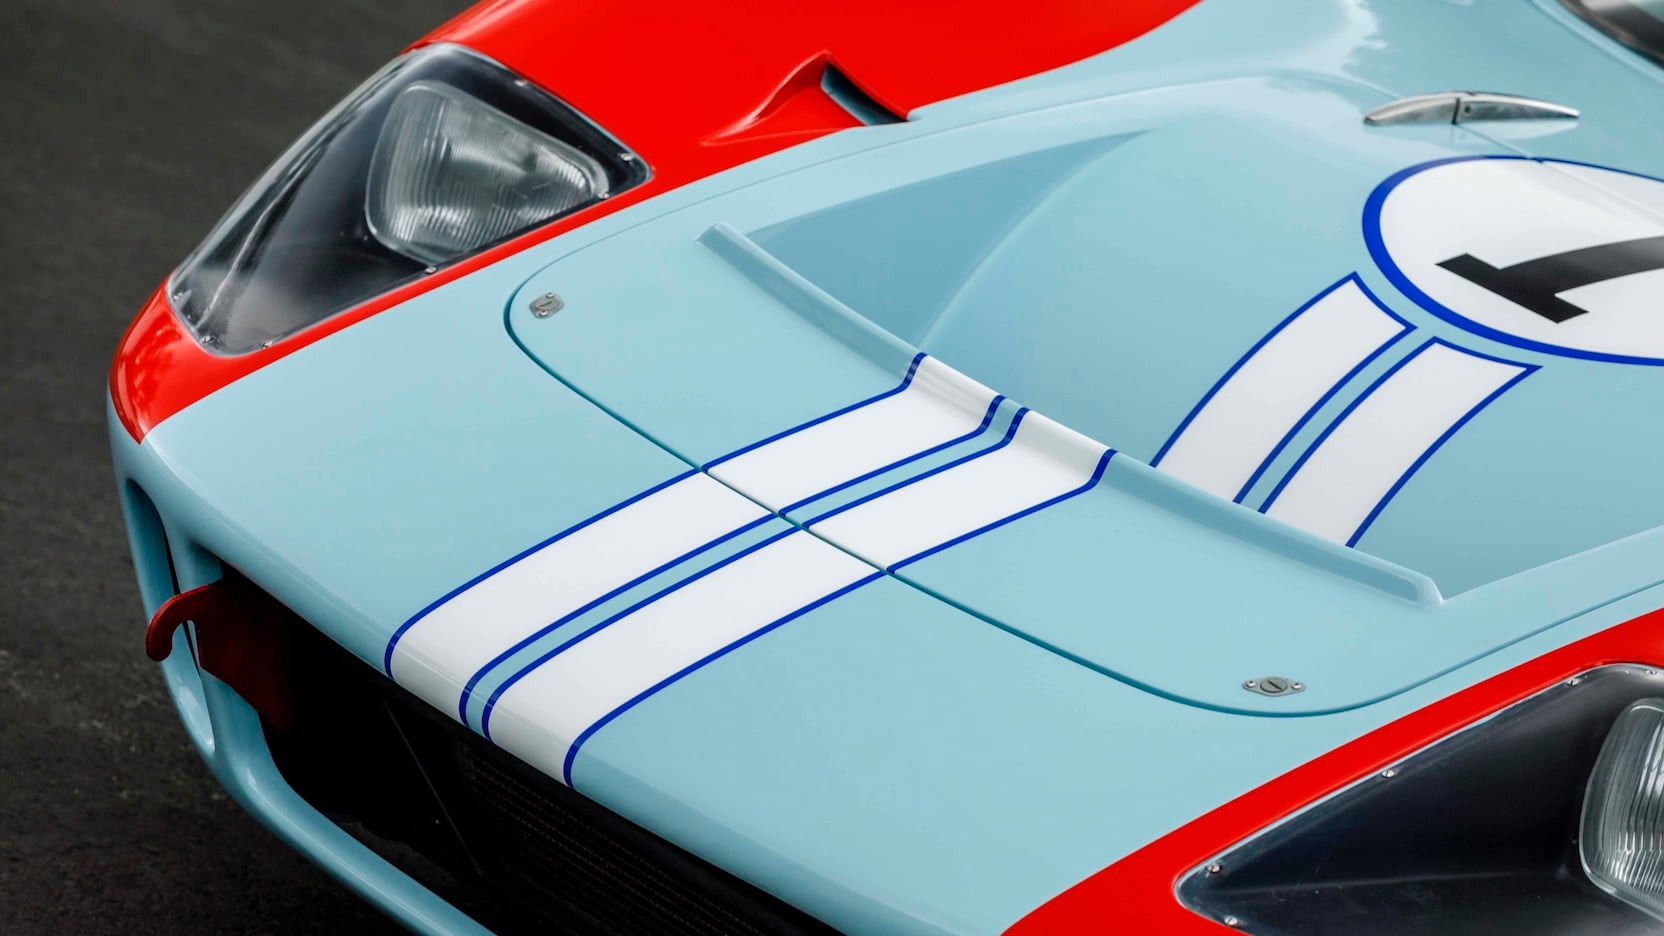 For Sale: The Ken Miles Car From Ford v Ferrari Superformance